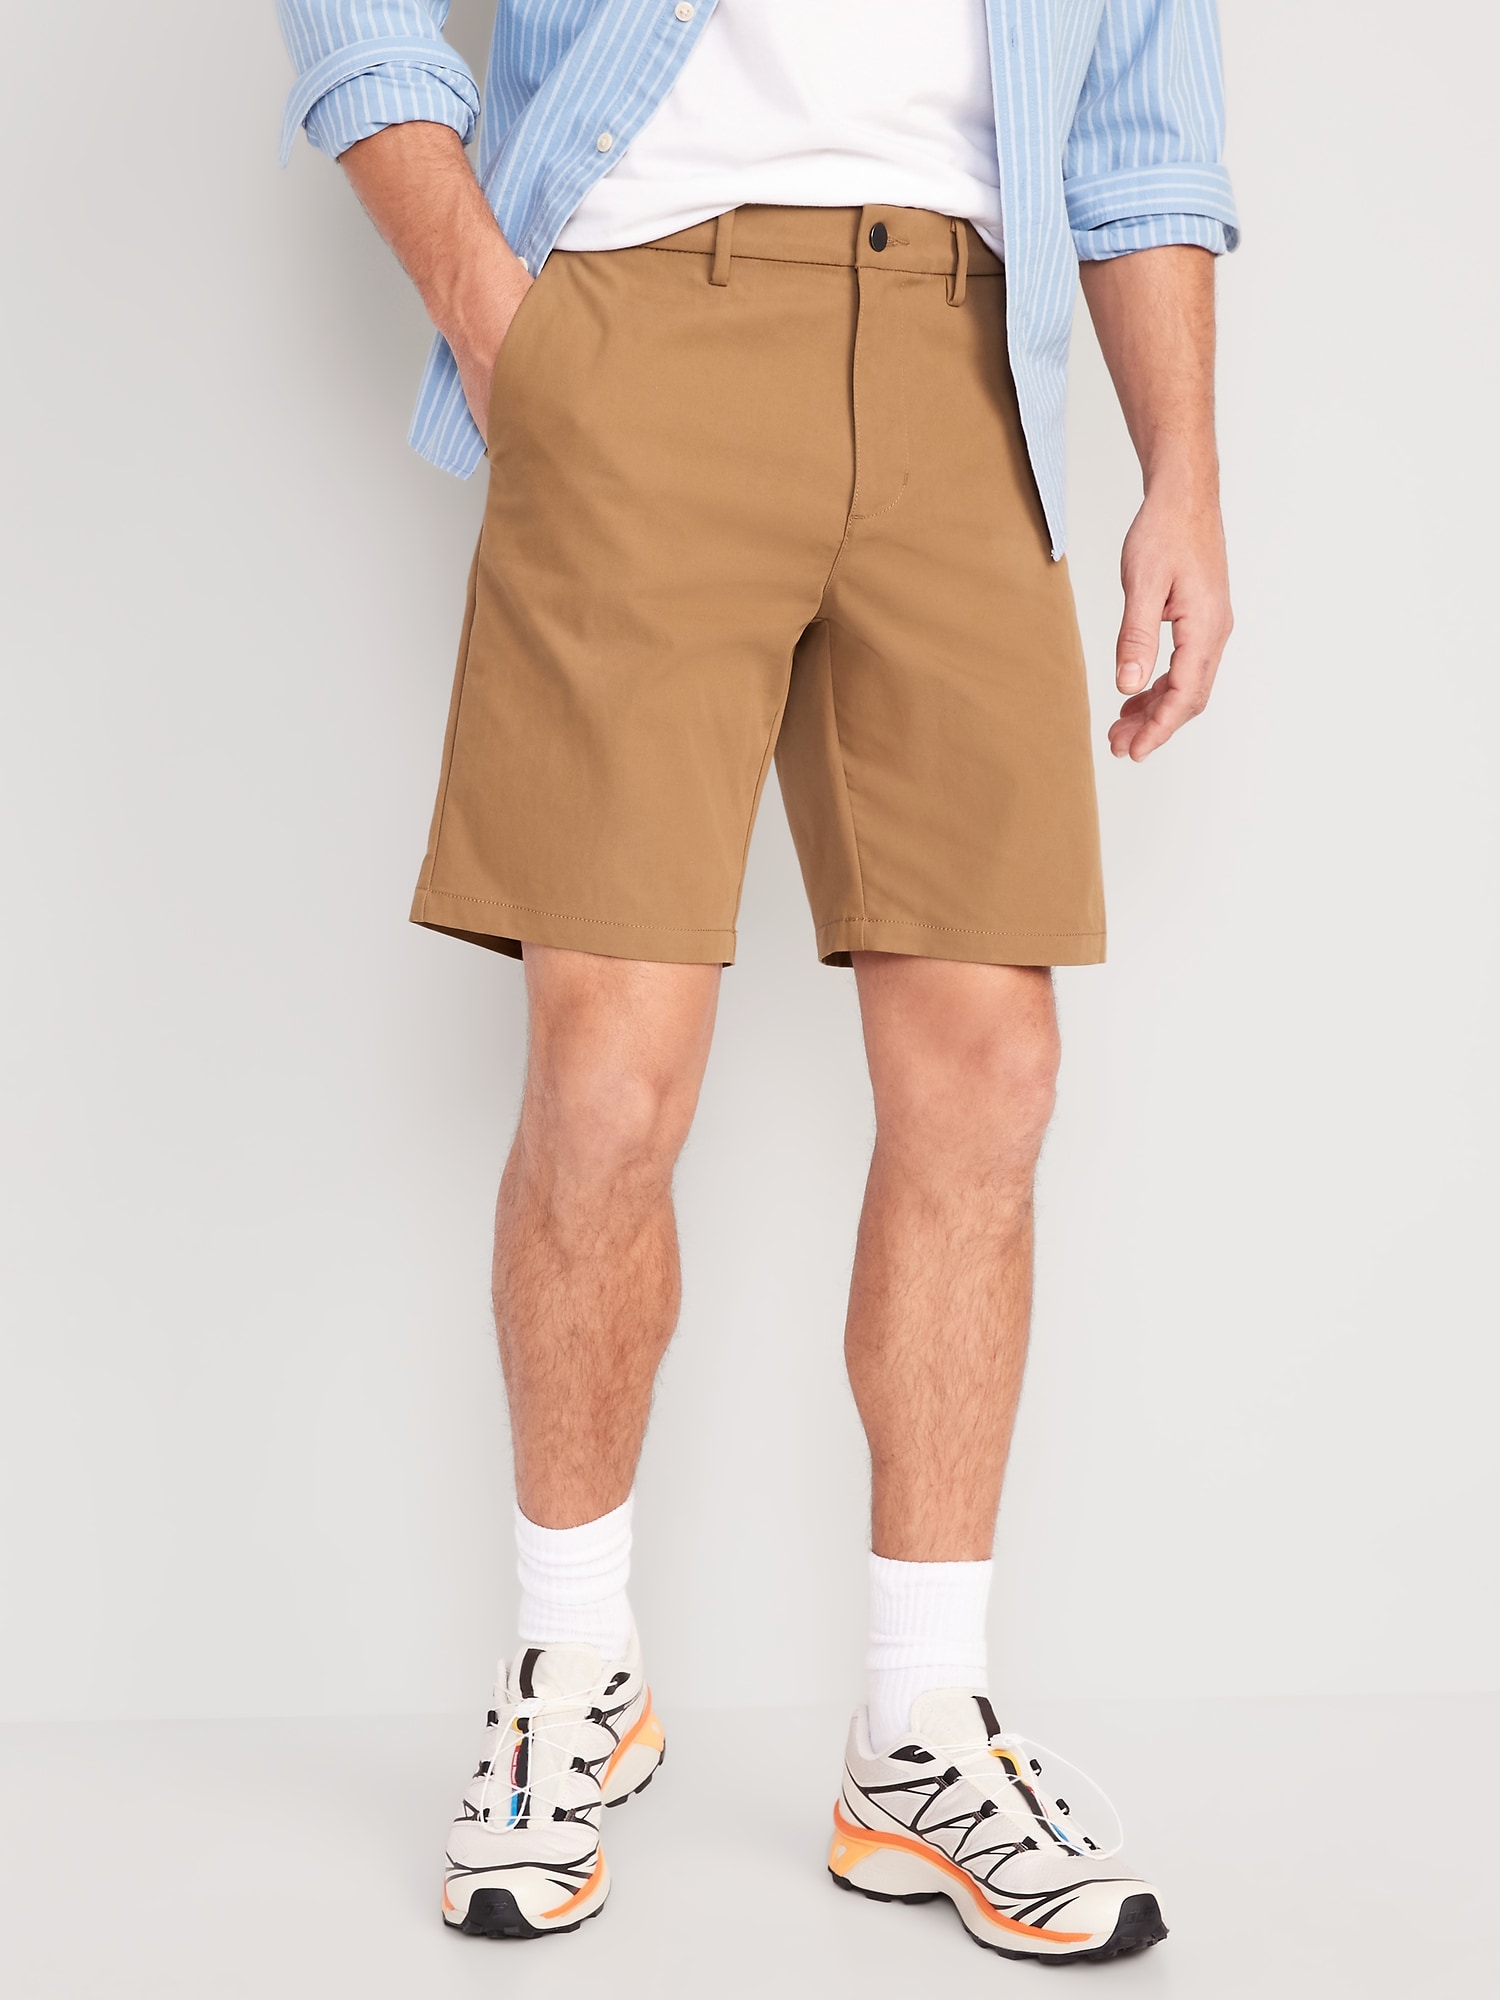 Slim Ultimate Tech Chino Shorts -- 9-inch inseam